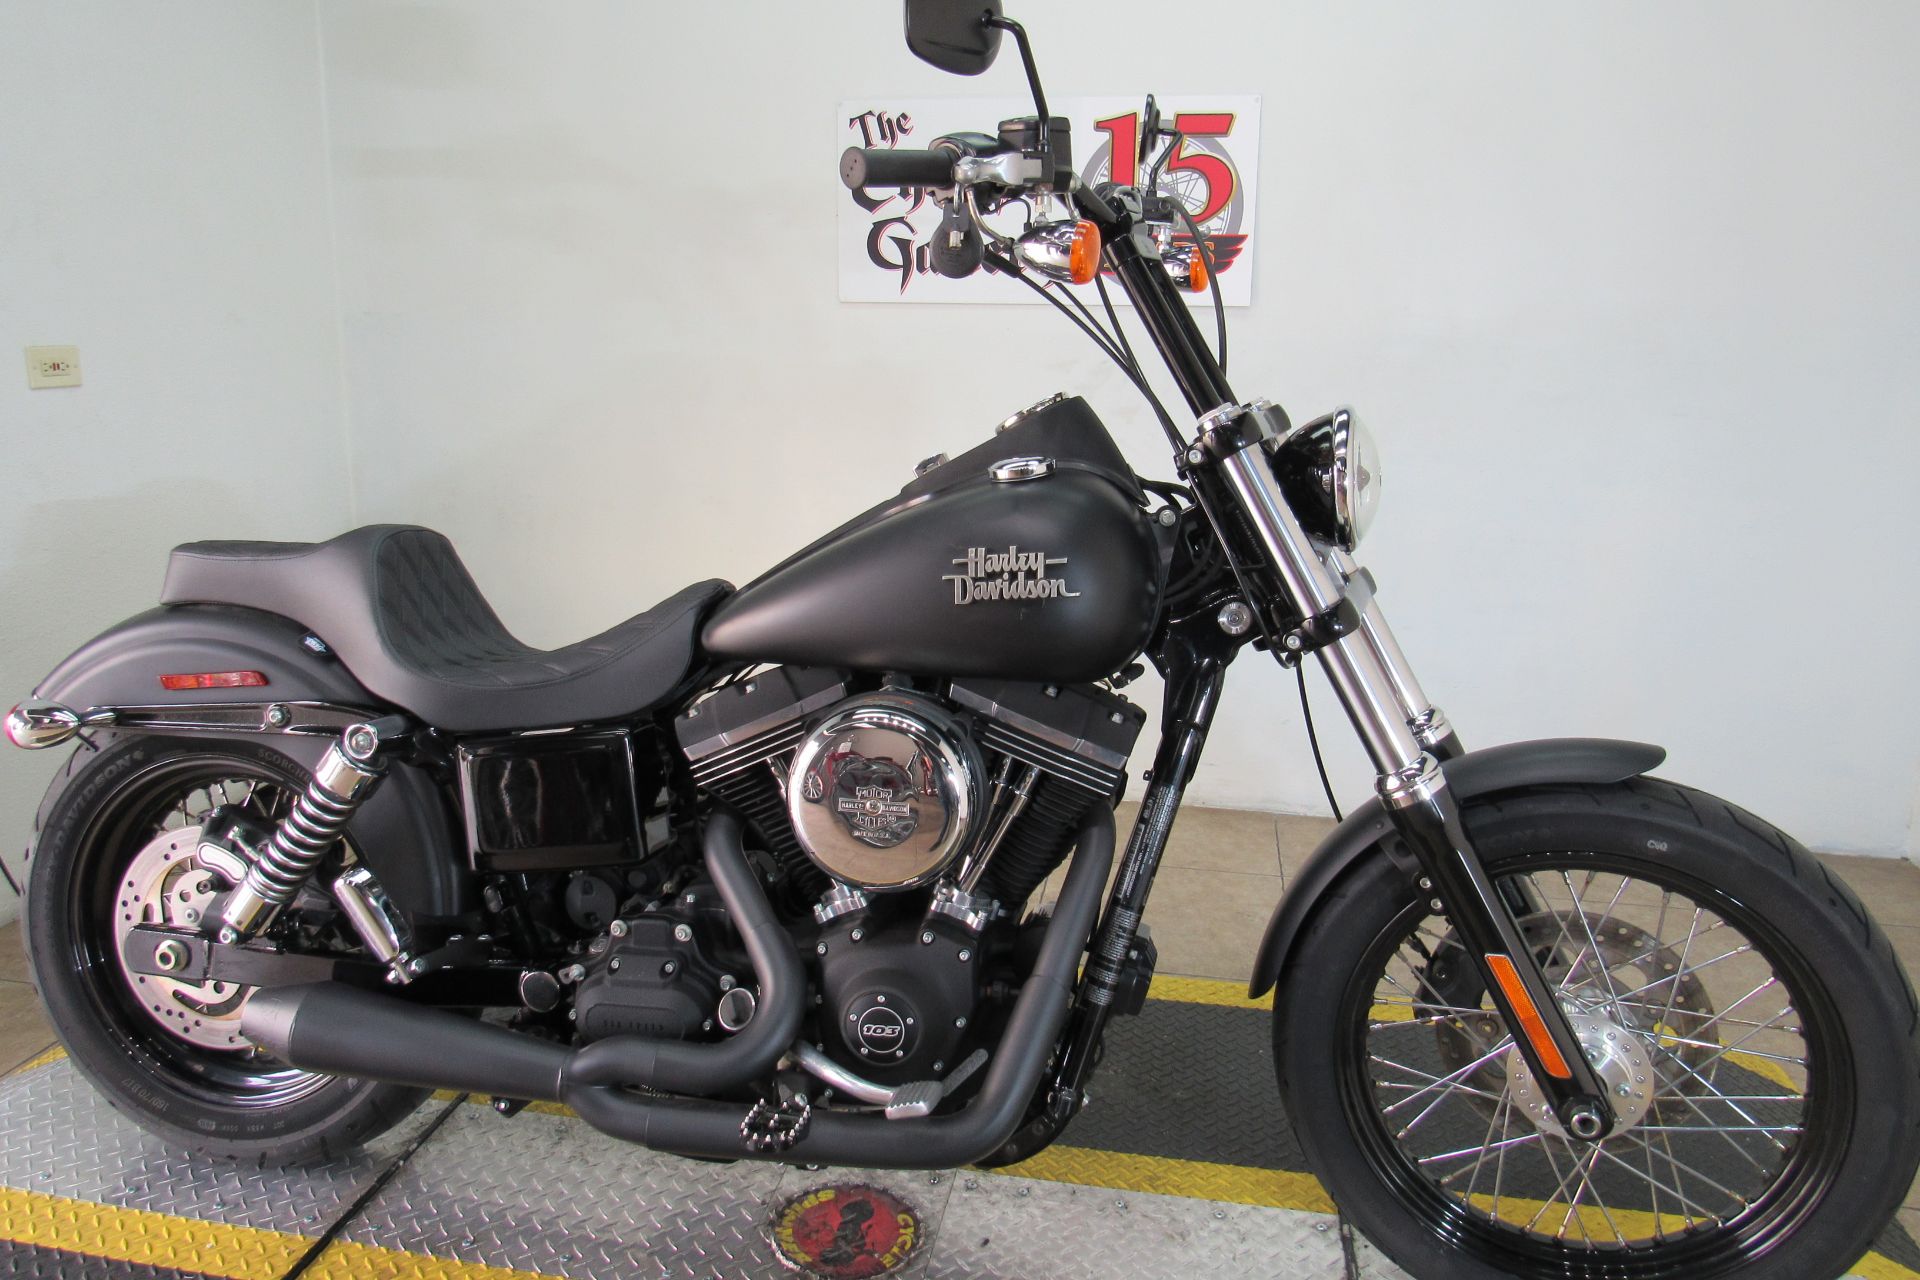 2016 Harley-Davidson Street Bob® in Temecula, California - Photo 3